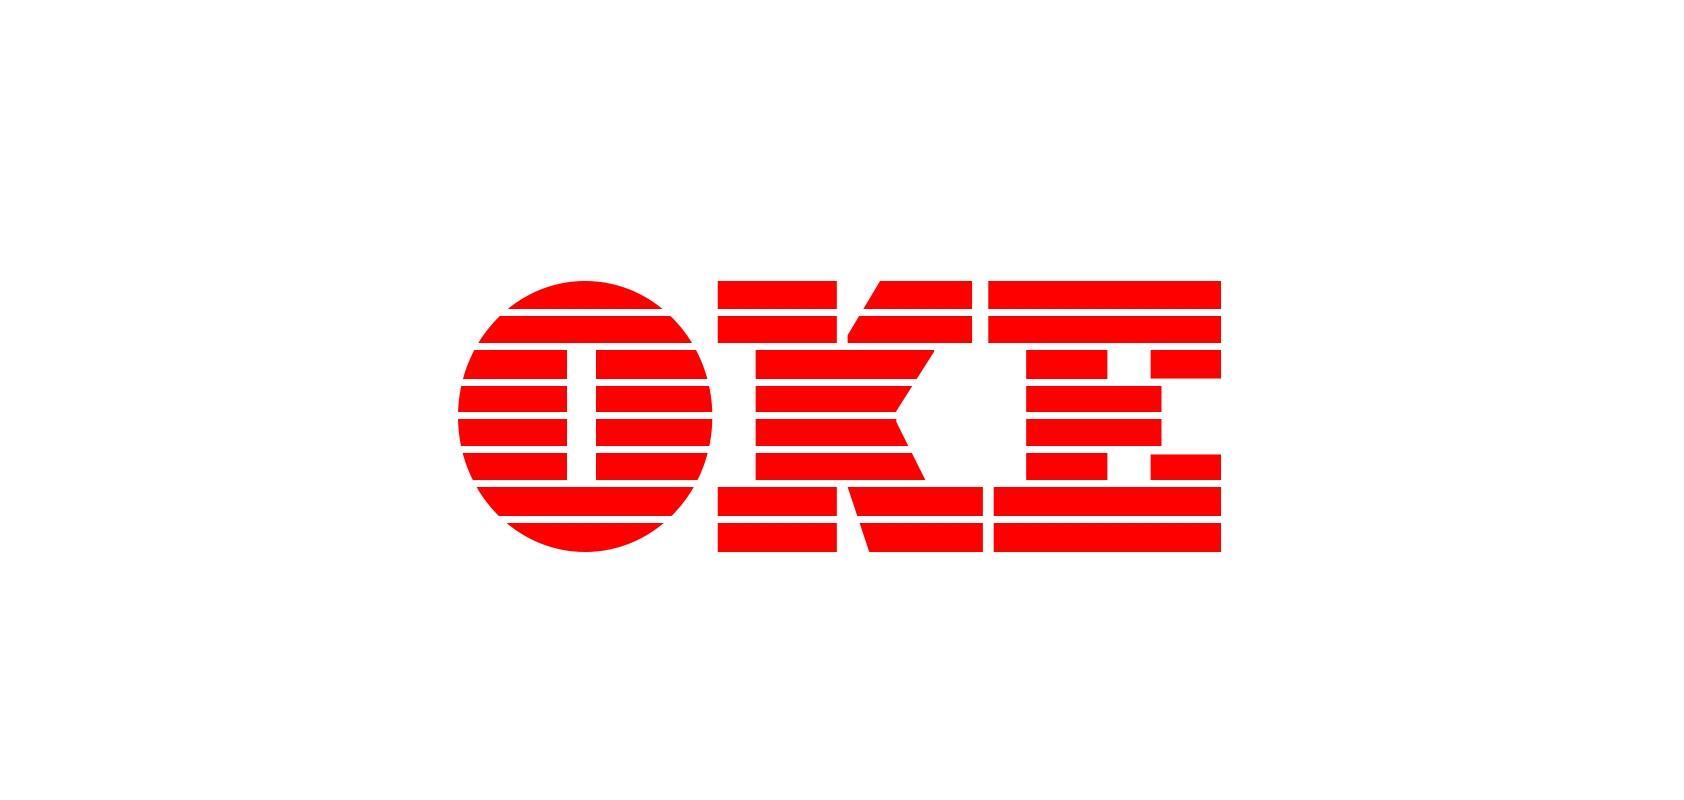 OKE品牌logo